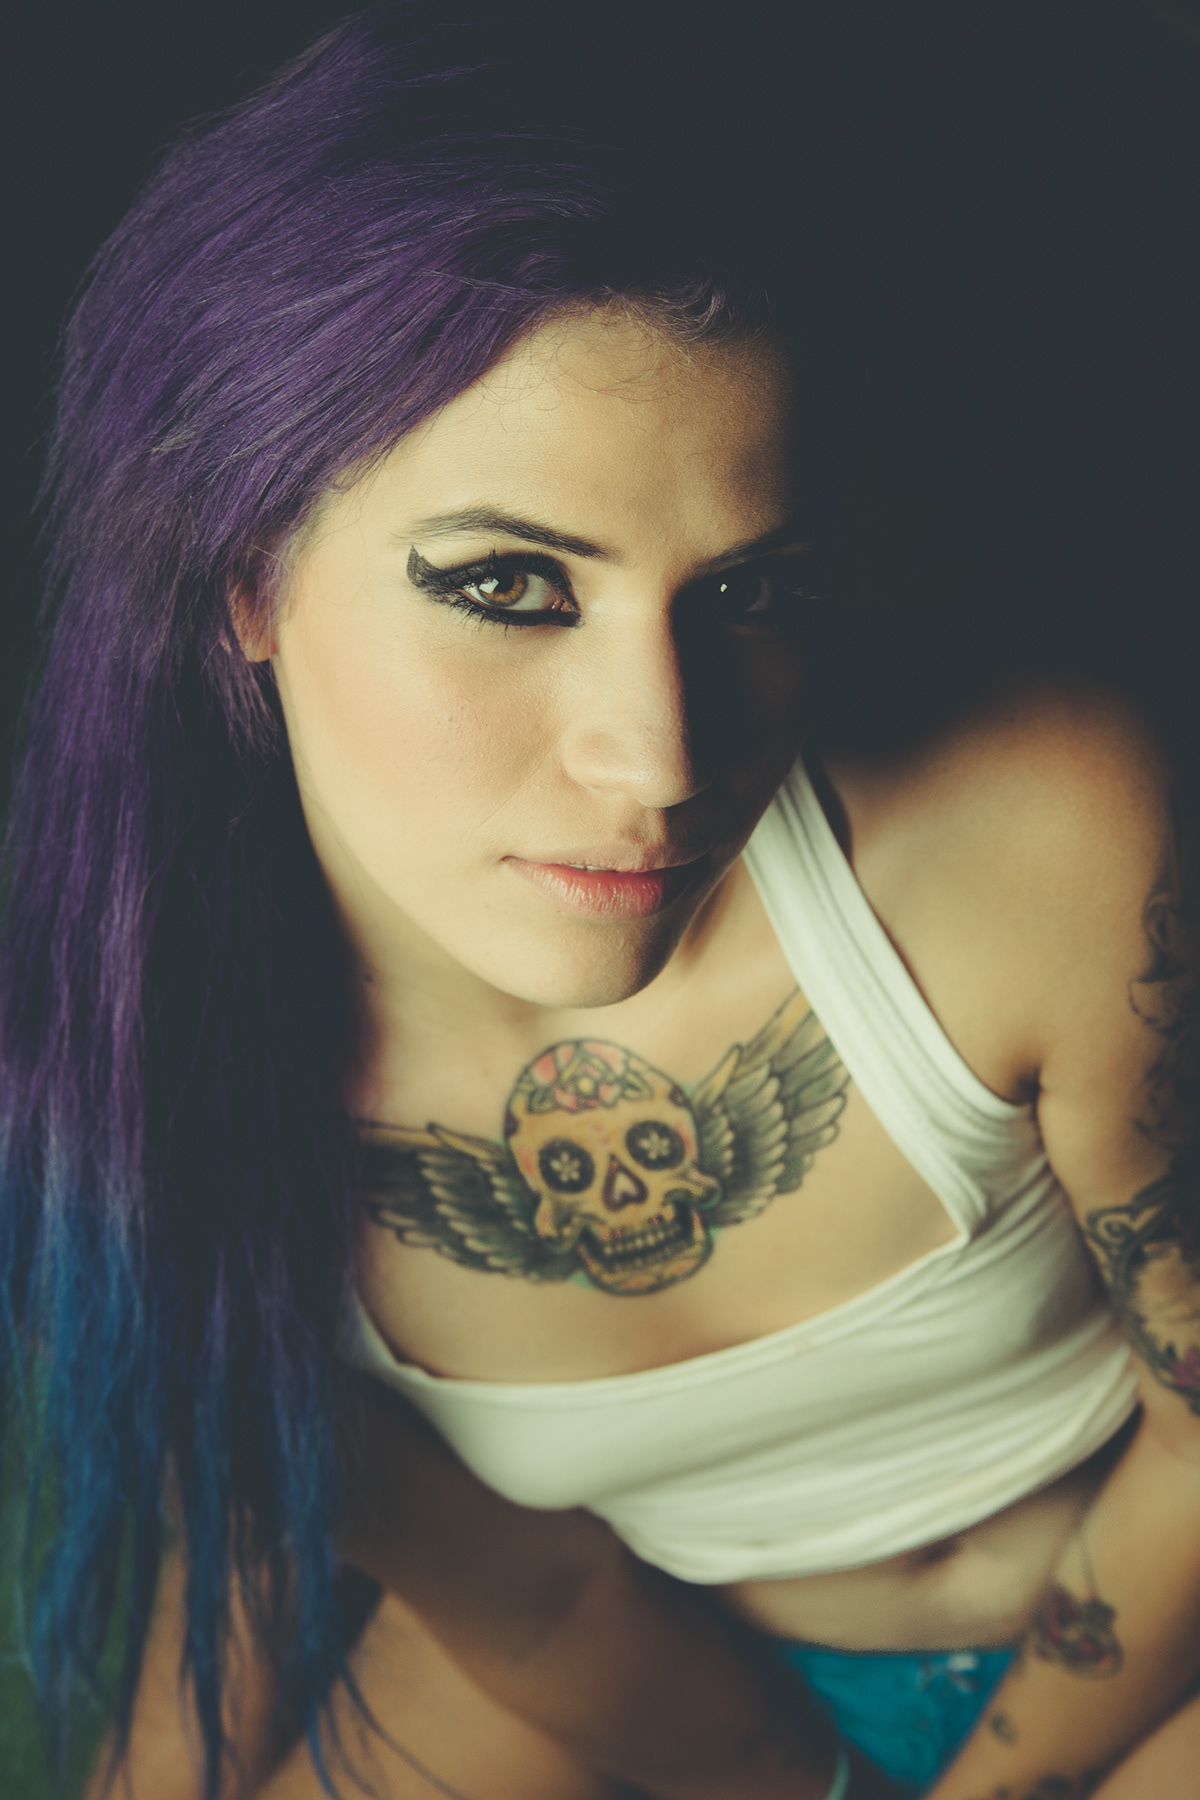 debbi joseph share blue hair tattoo girl nude photos